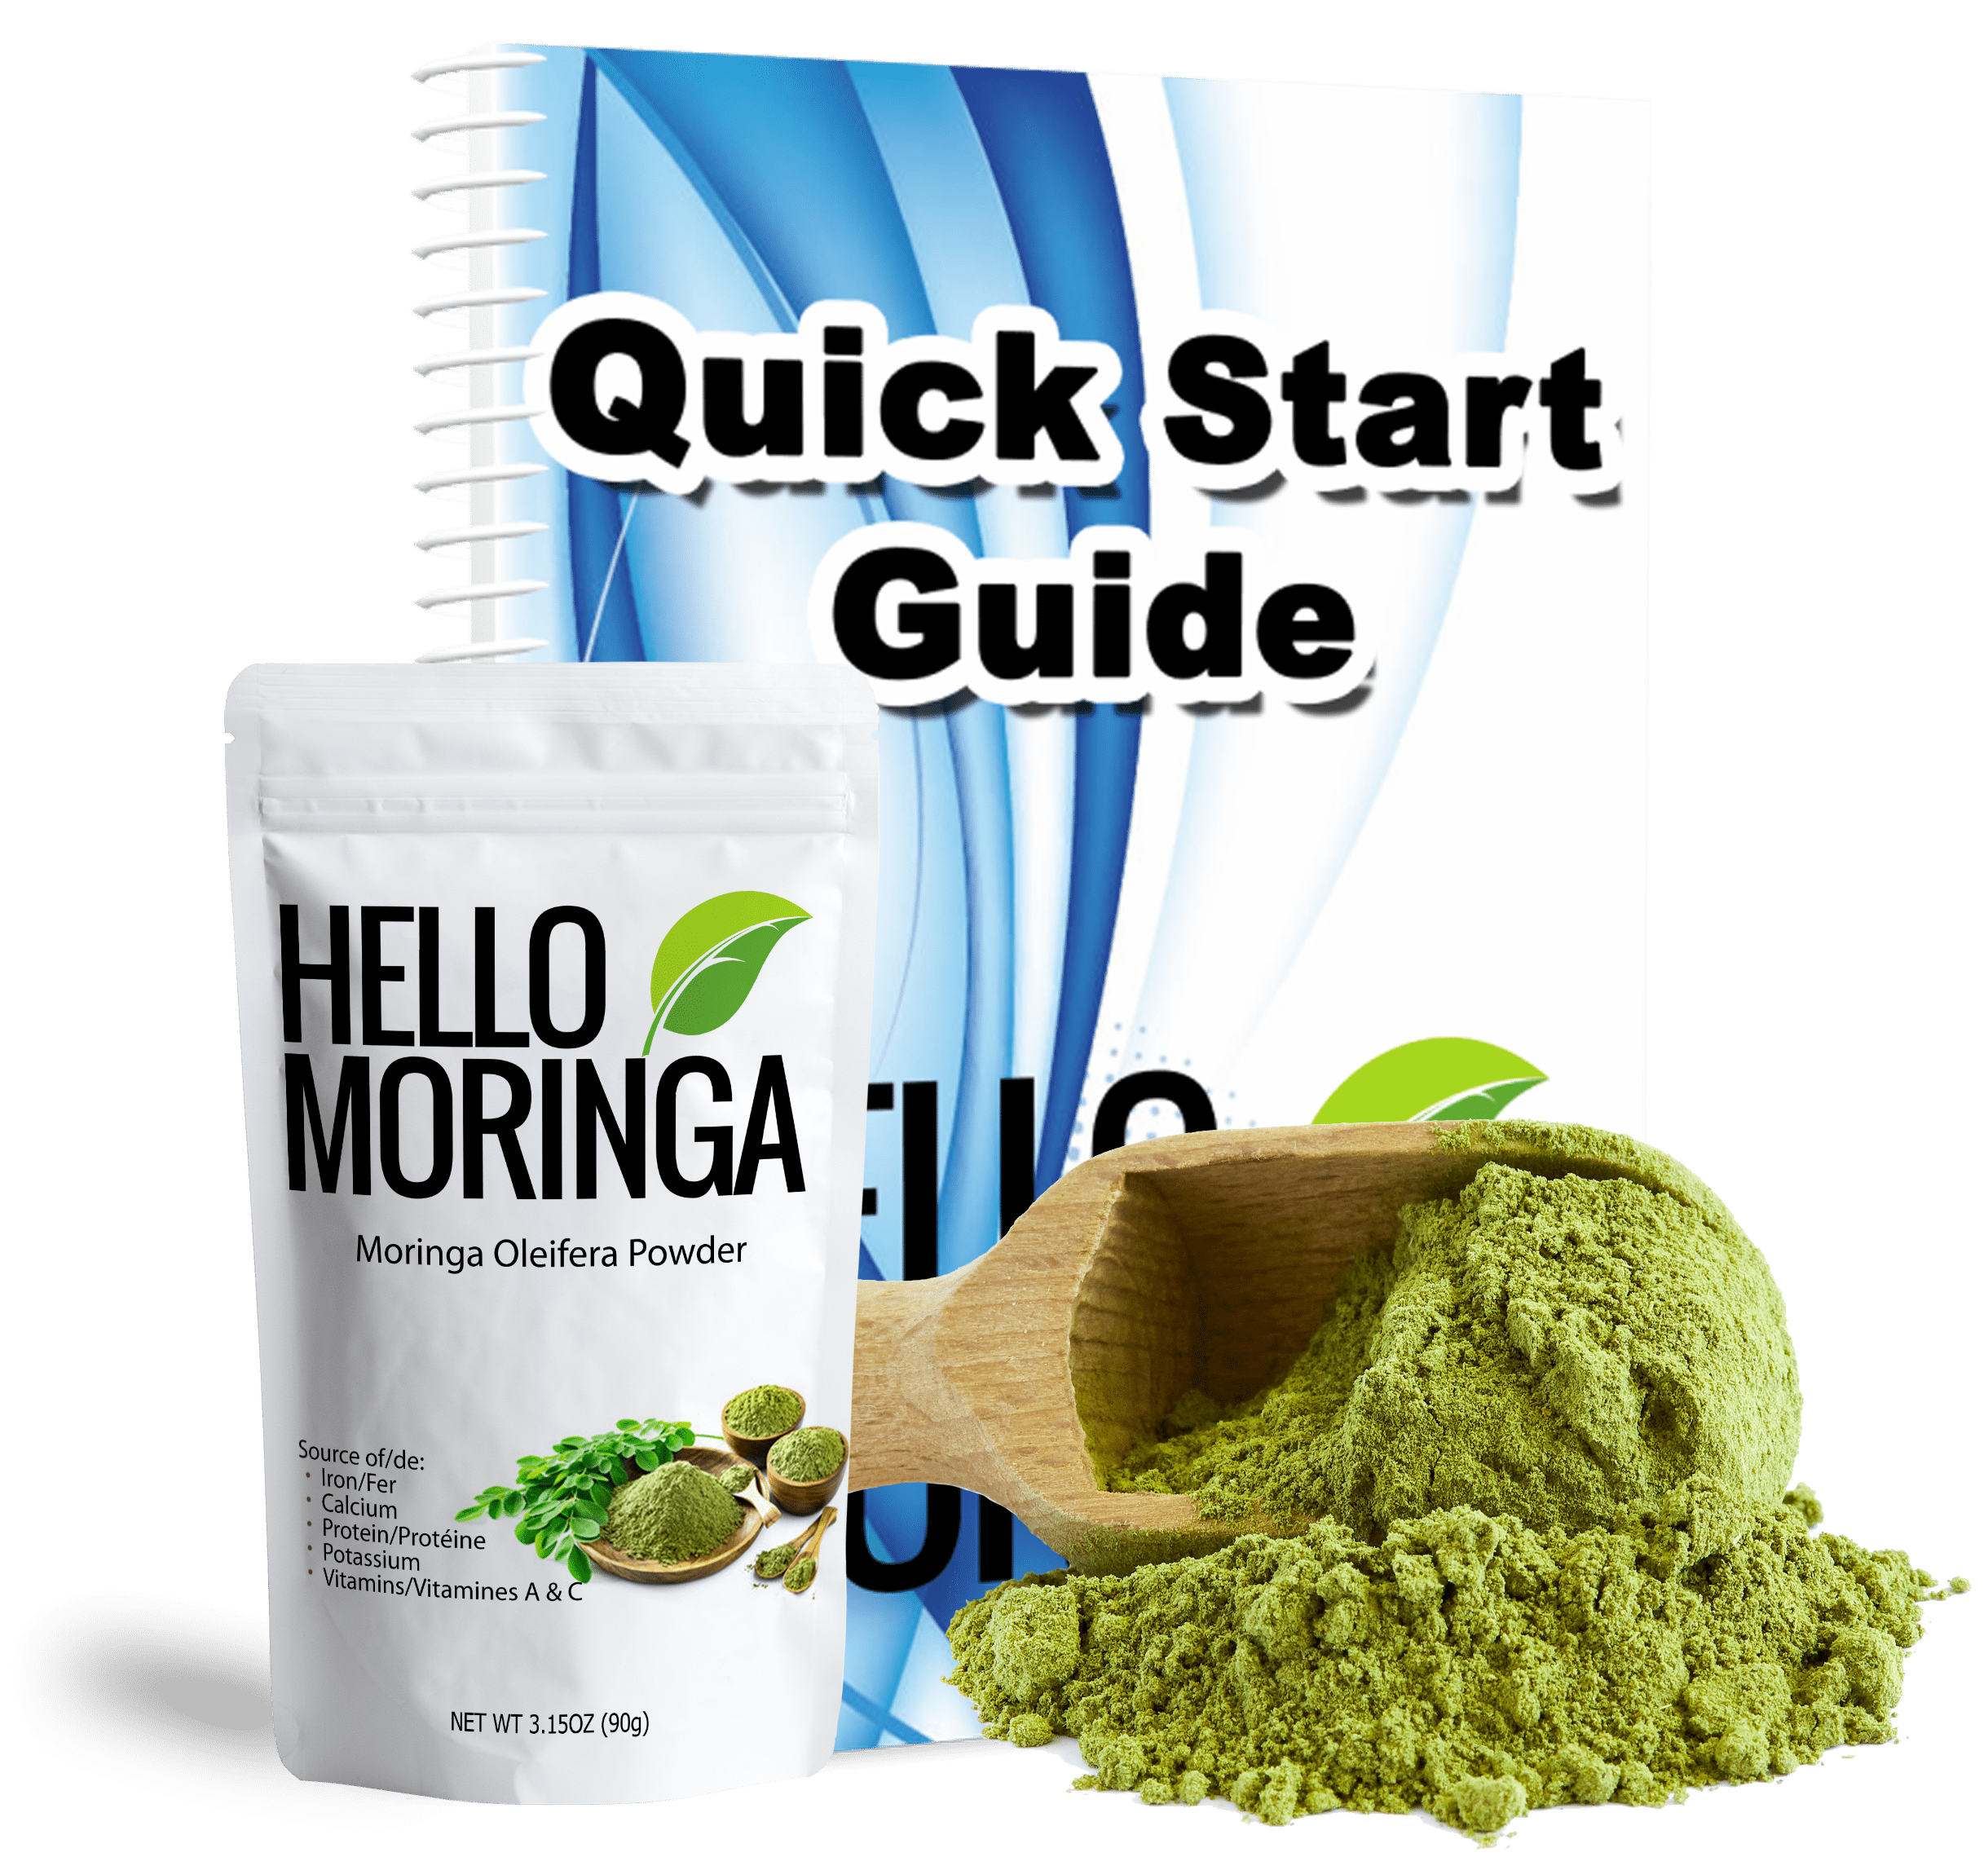 Hello Moringa - Moringa Powder & Quick Start Guide